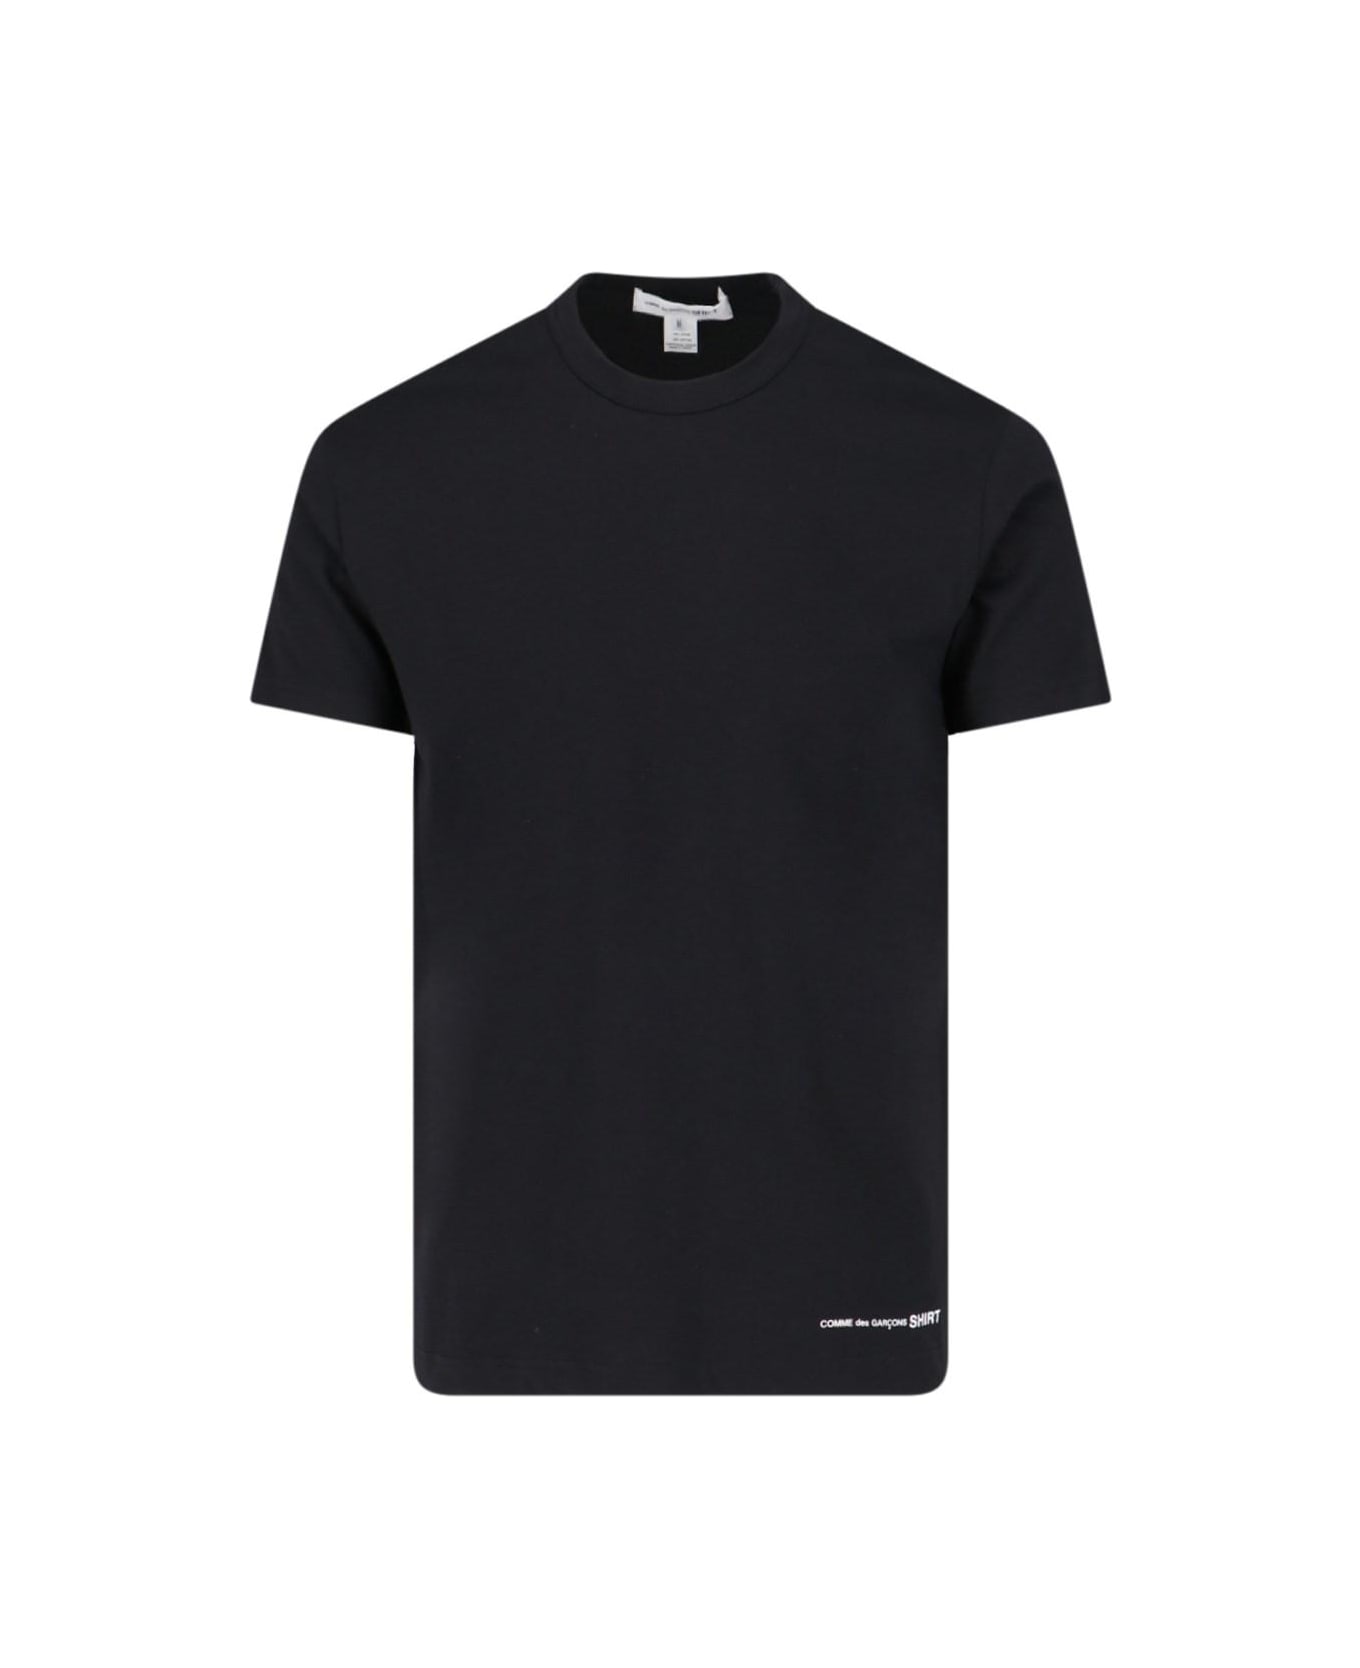 Comme des Garçons Shirt Basic T-shirt - Black シャツ